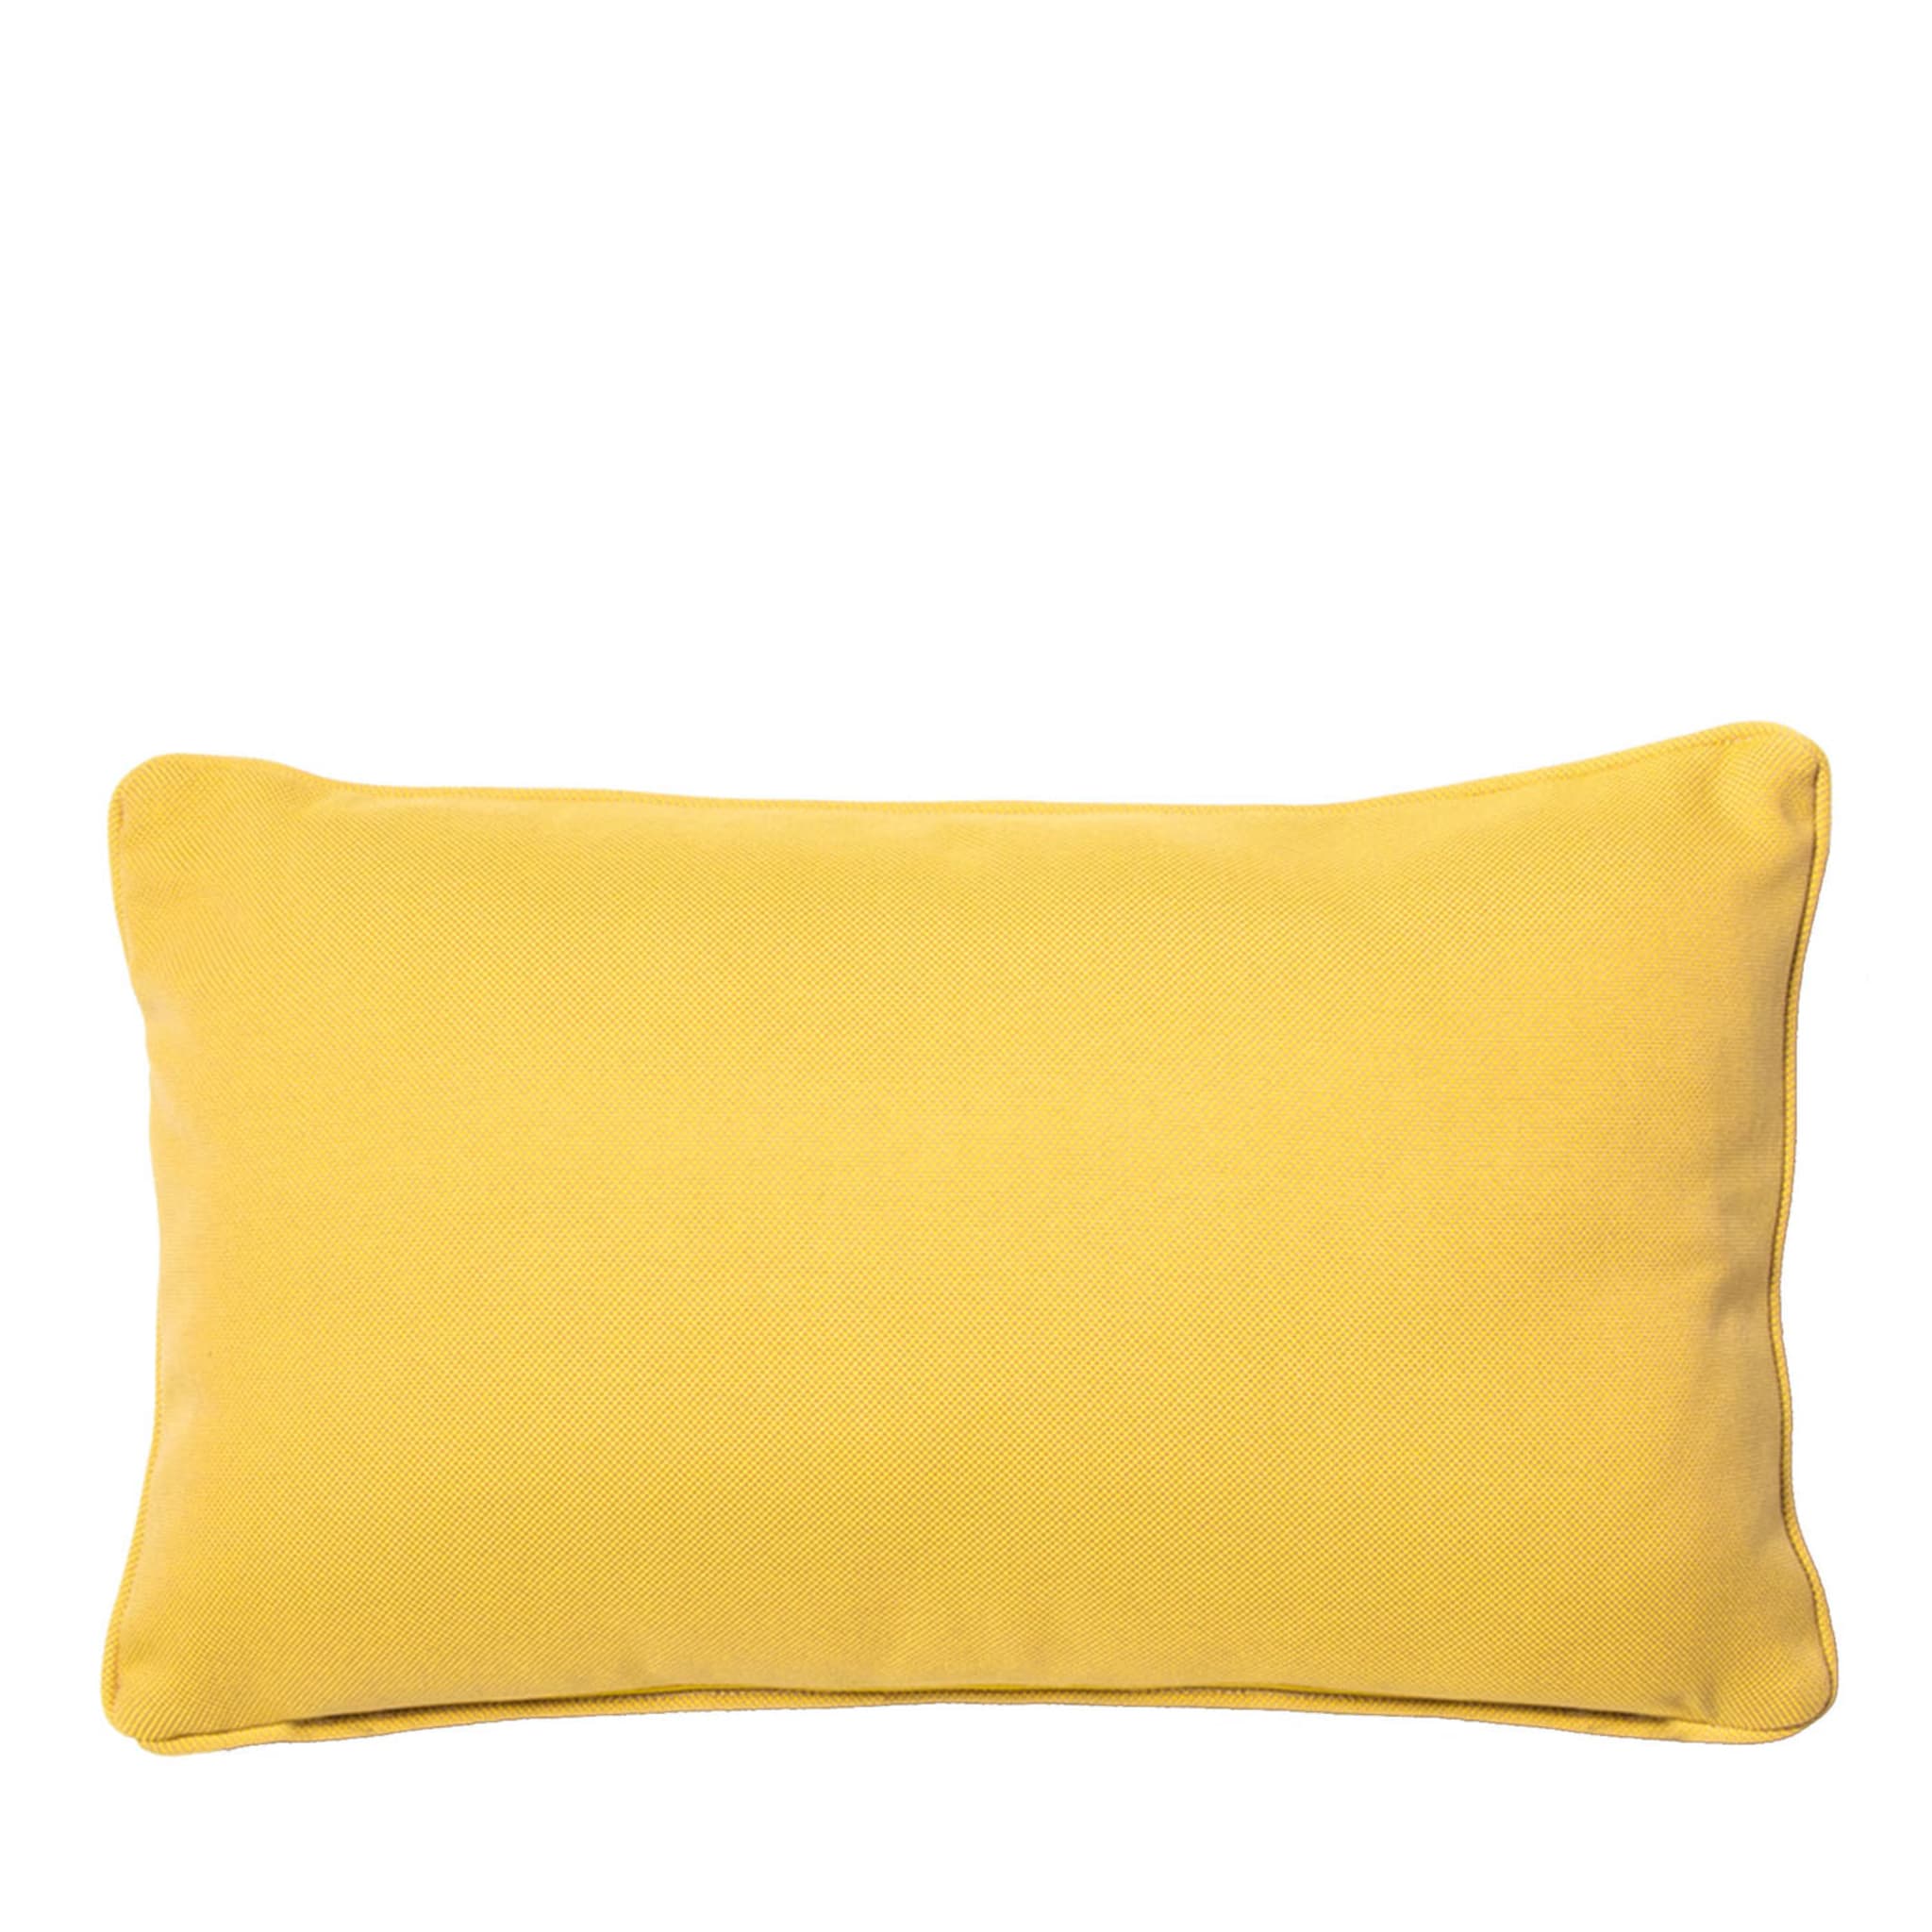 Mia Lemon Waterproof Small Cushion by Luciana Gomez - Alternative view 1